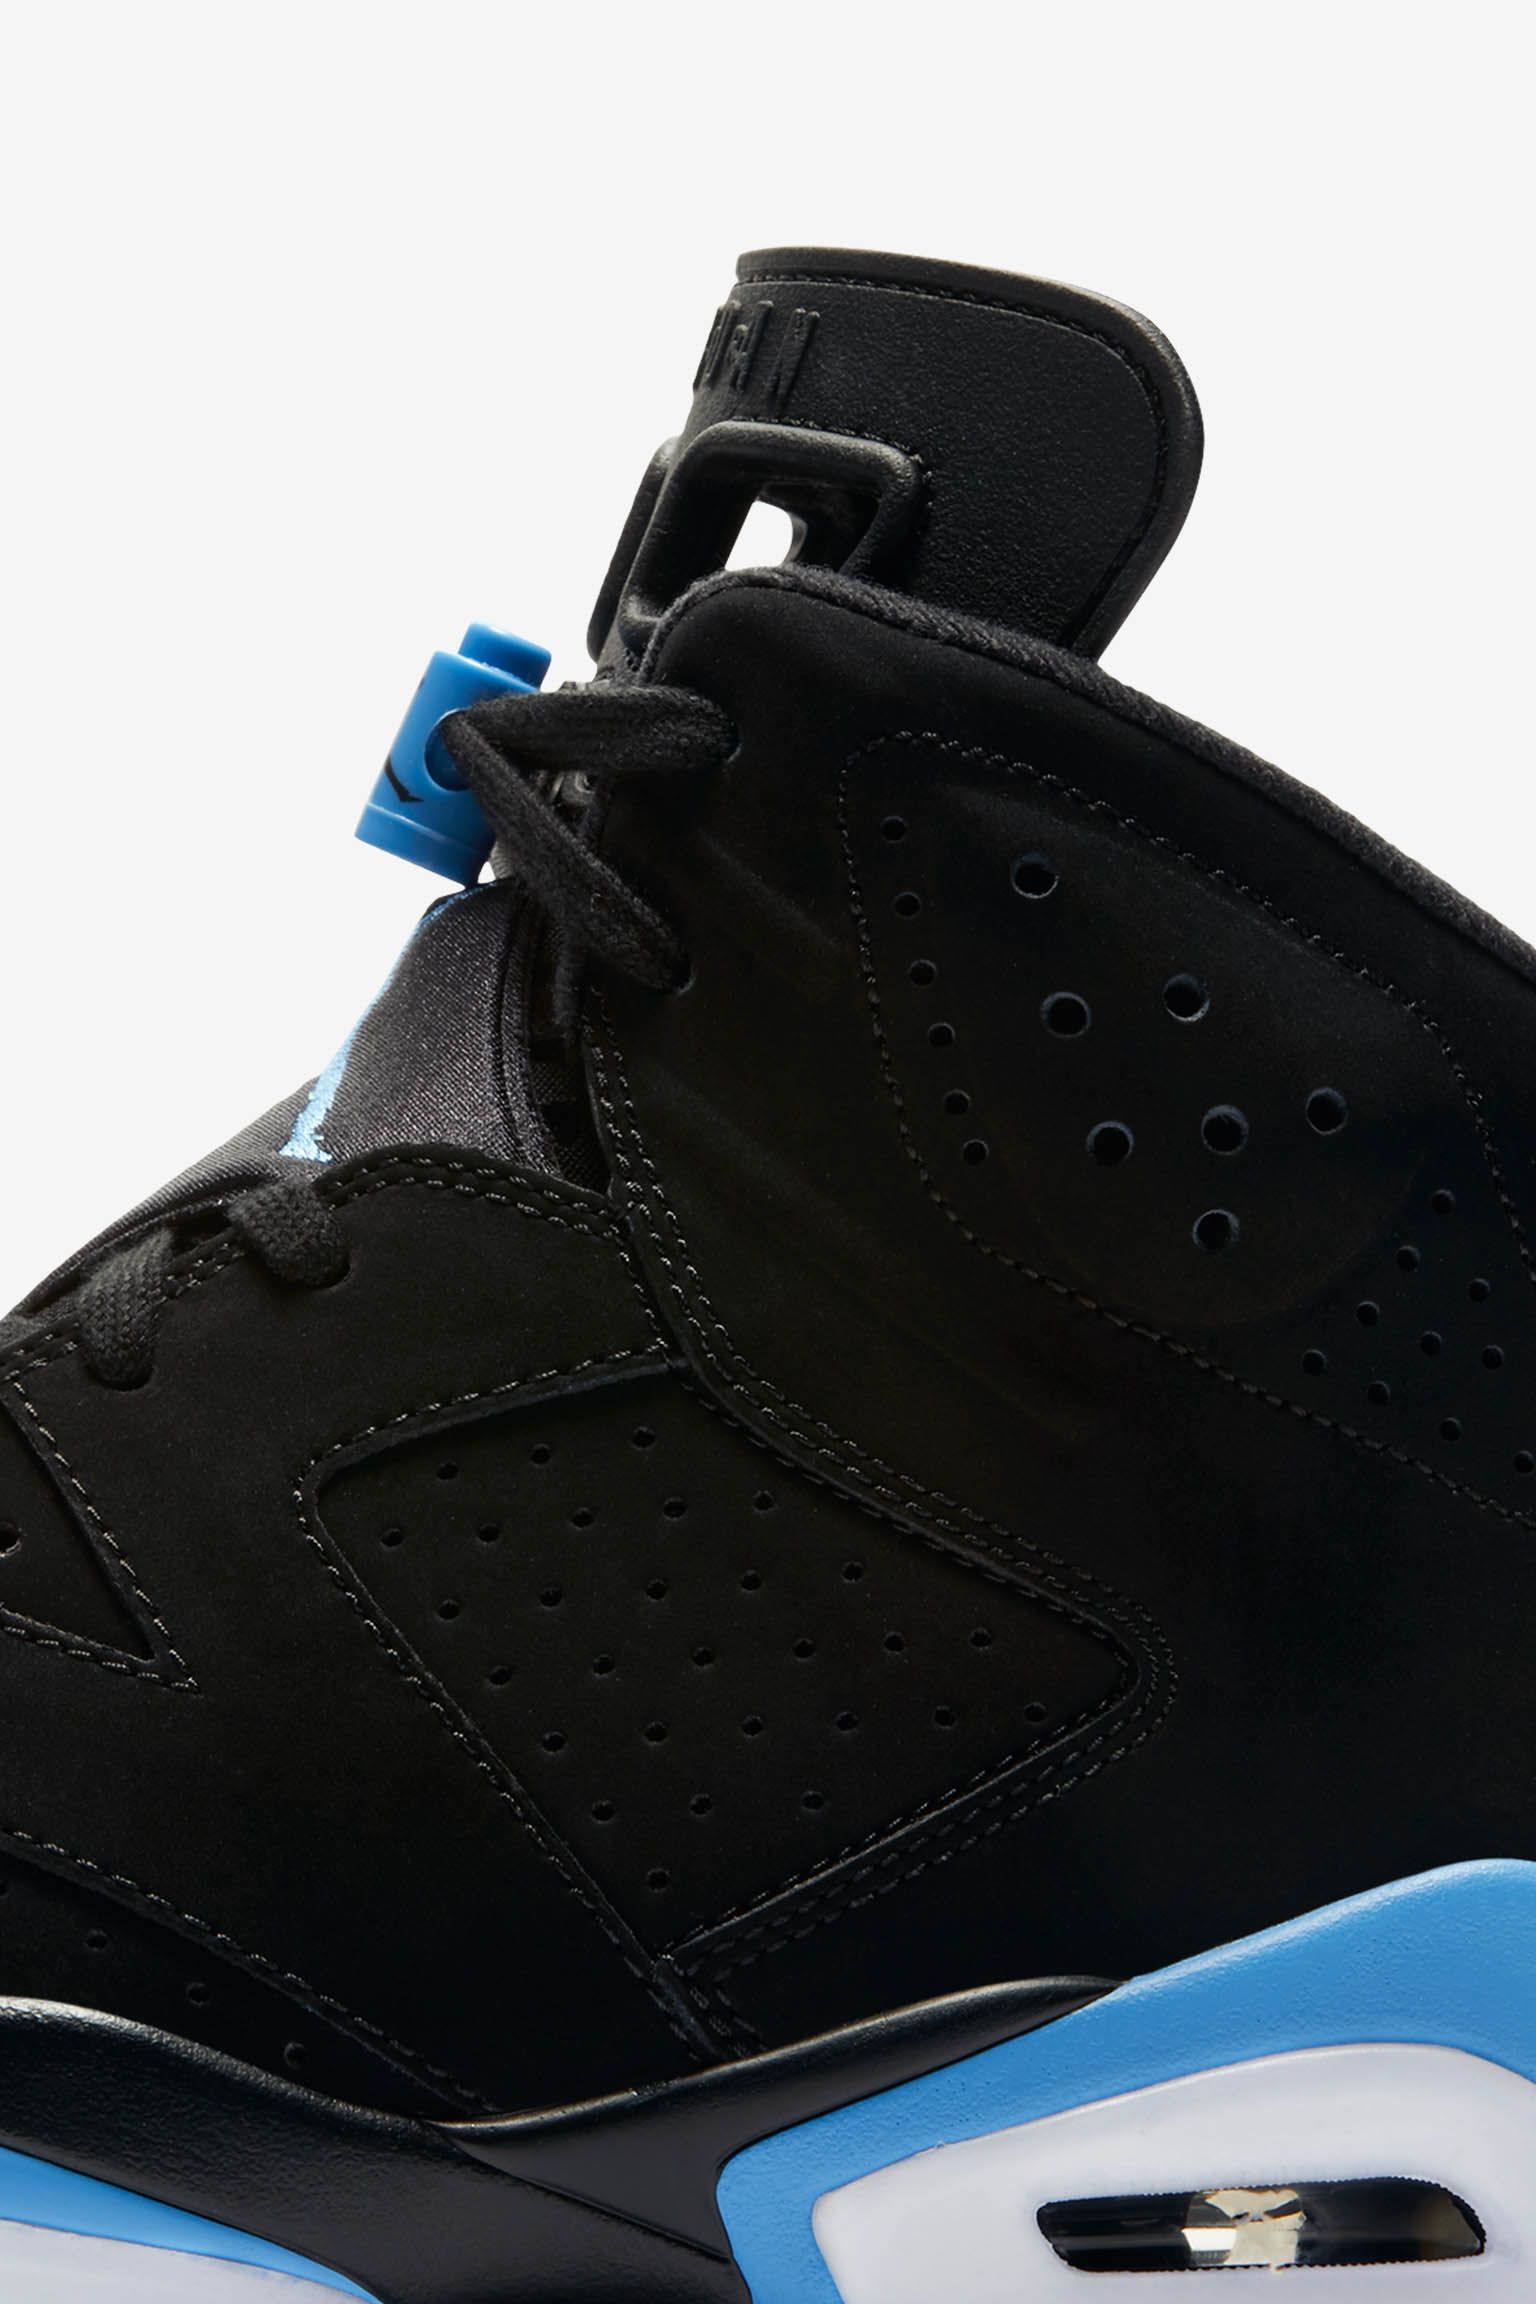 Air Jordan 6 'Black & University Blue' Release Date. Nike SNKRS